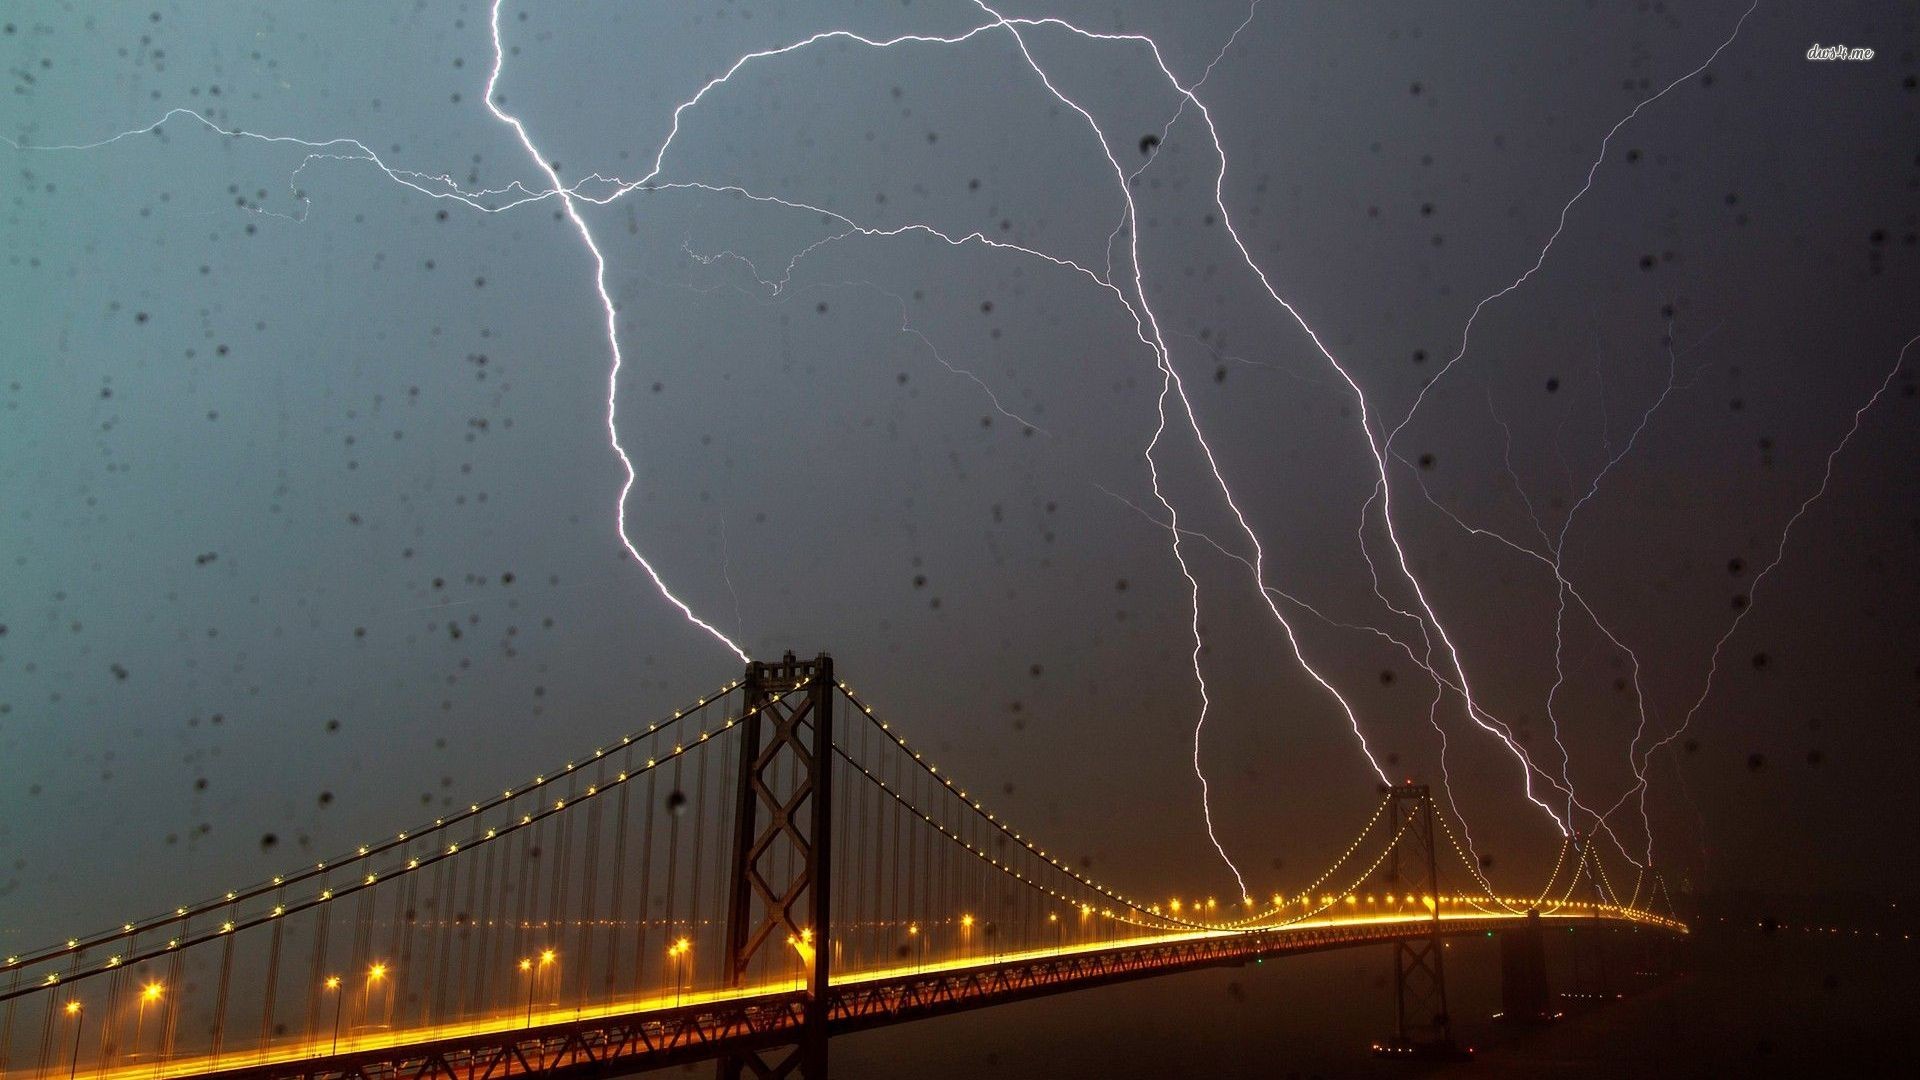 1920x1080 ... Lightning over the San Francisco-Oakland Bay Bridge wallpaper   ...